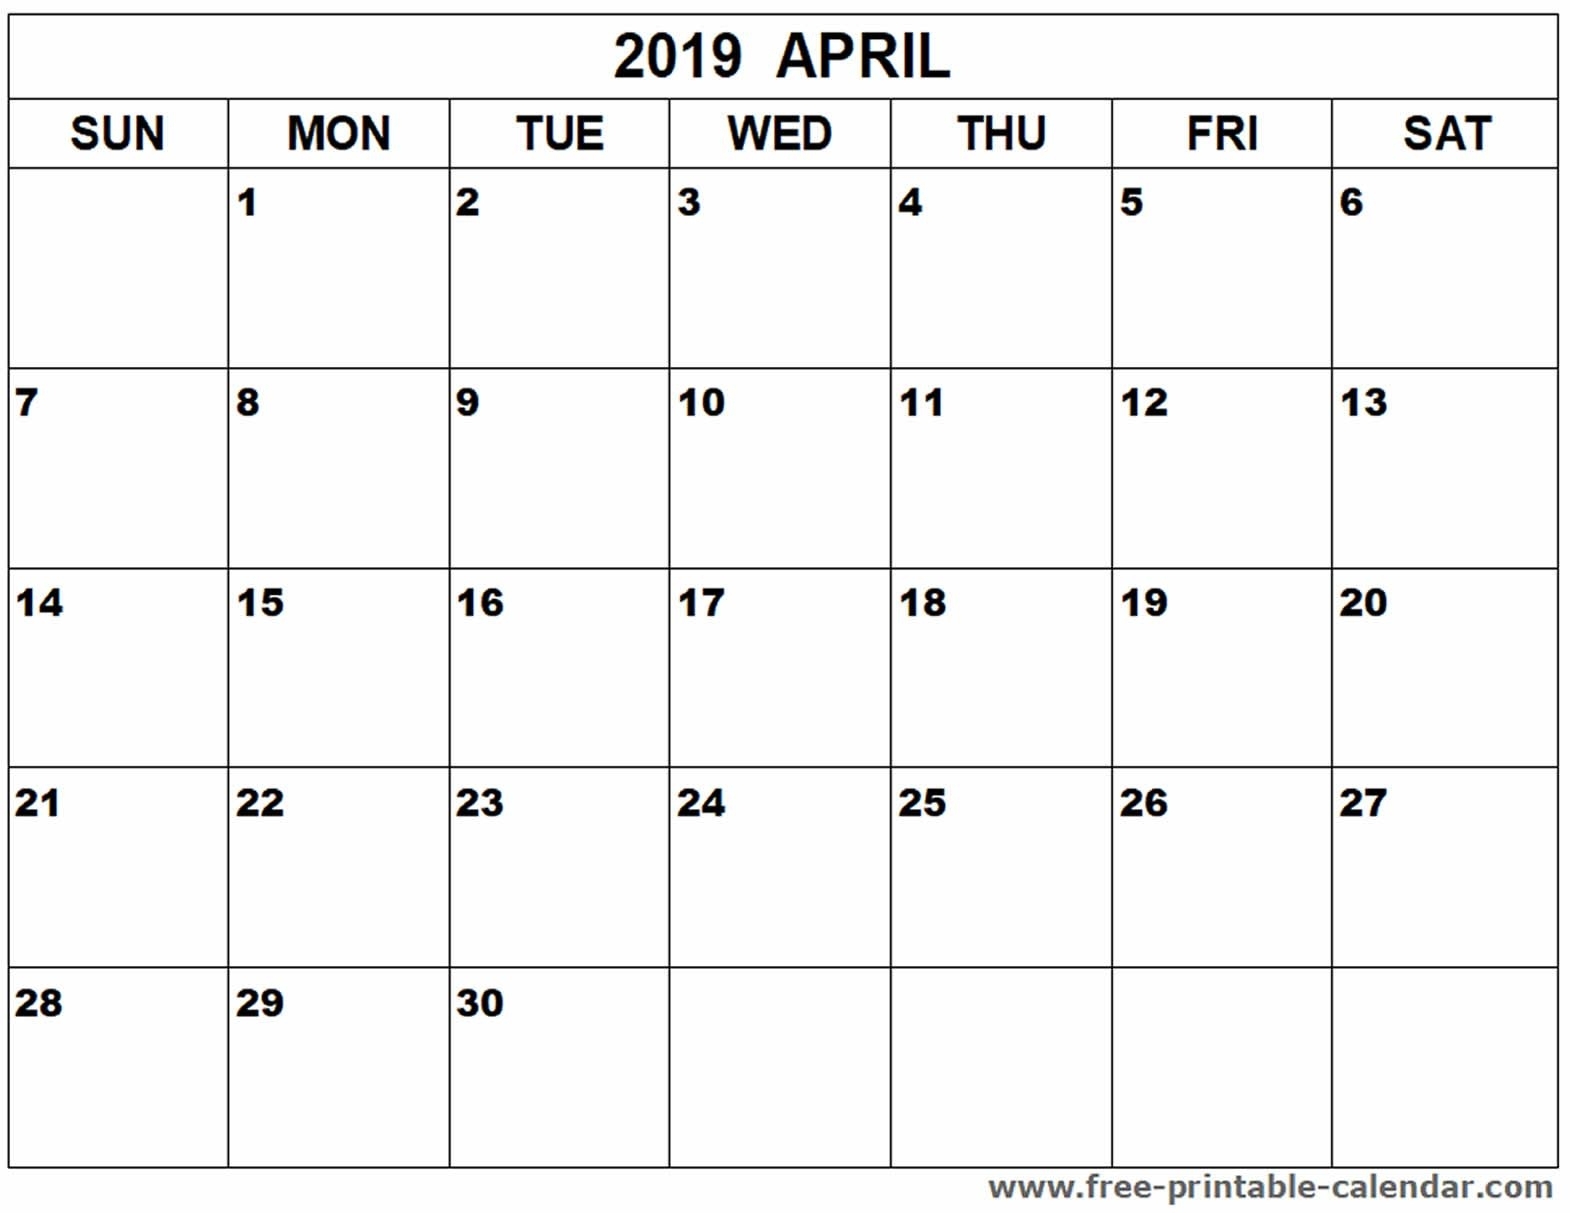 April 2019 Calendar Printable - Free-Printable-Calendar